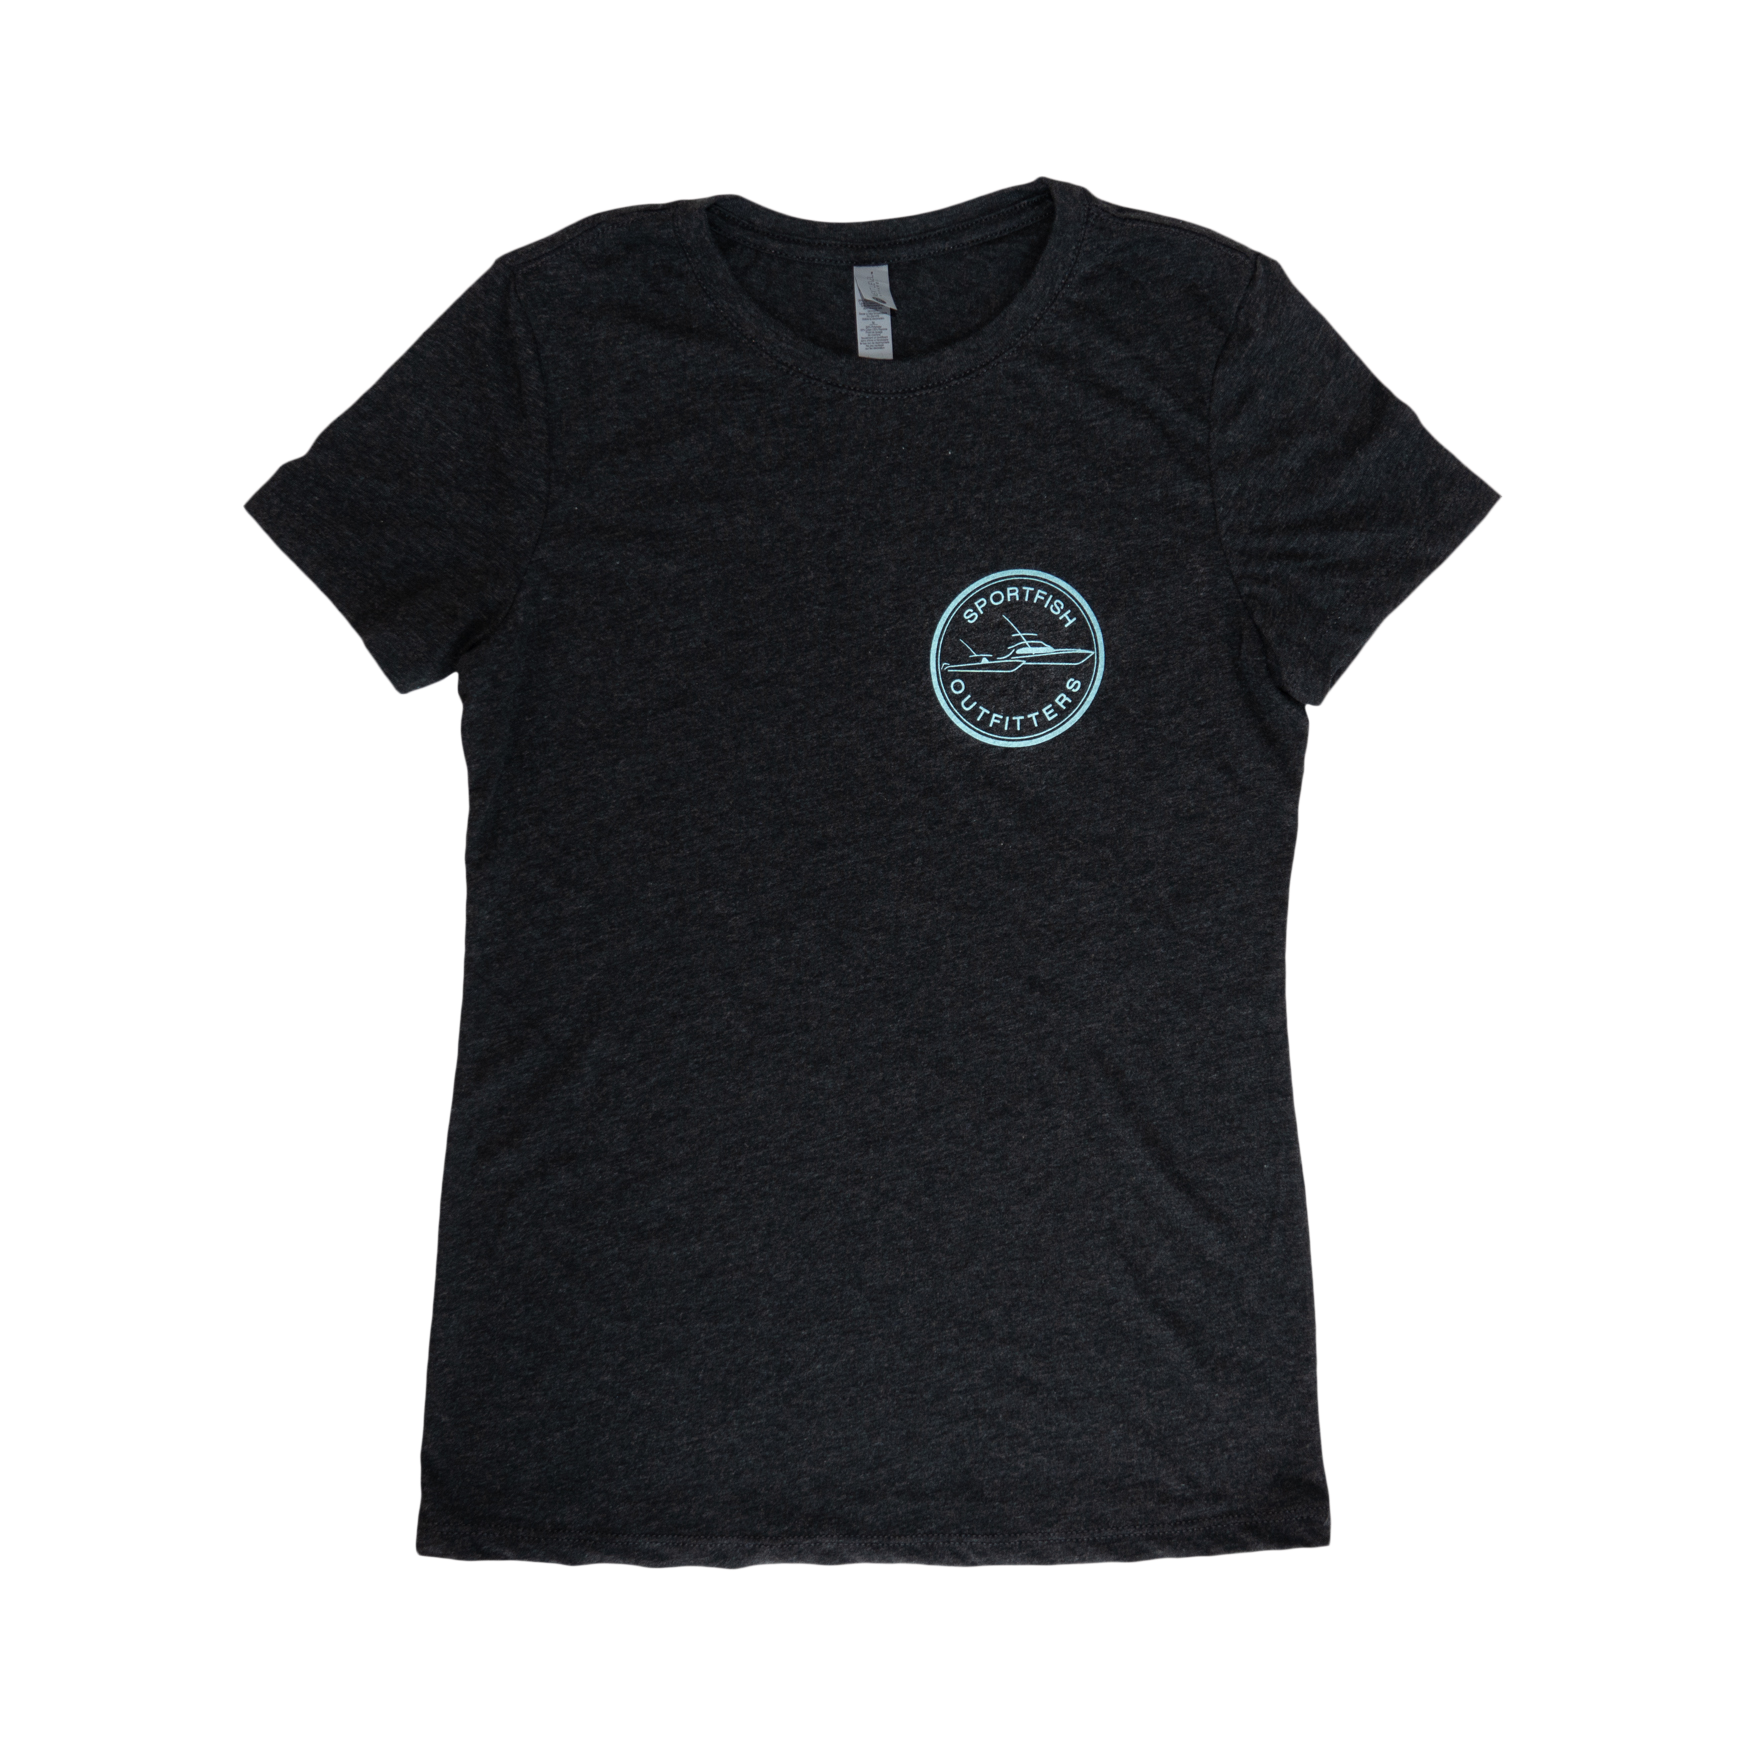 Sportfish Outfitters Women's Vintage Black Shirt